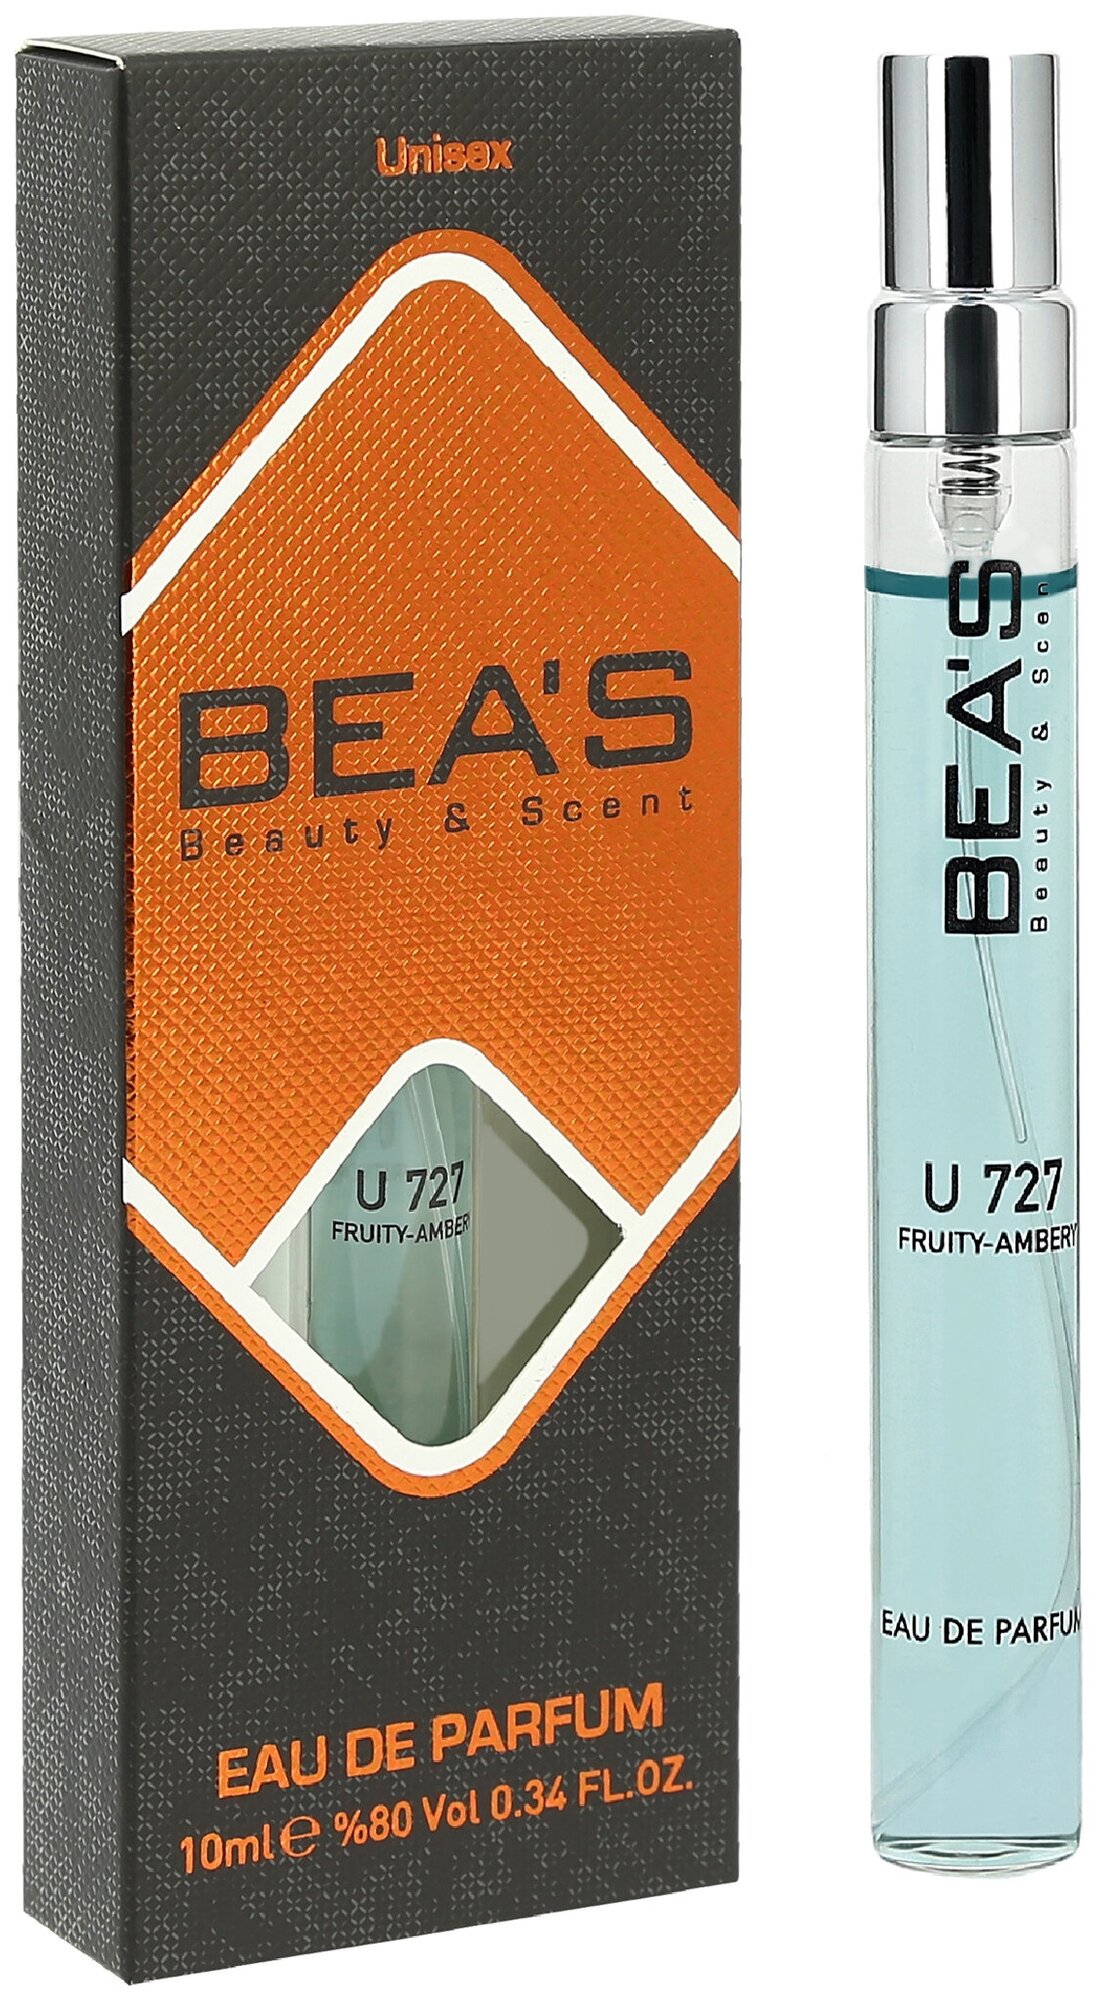 Bea's Номерная парфюмерия Unisex 10ml U 727